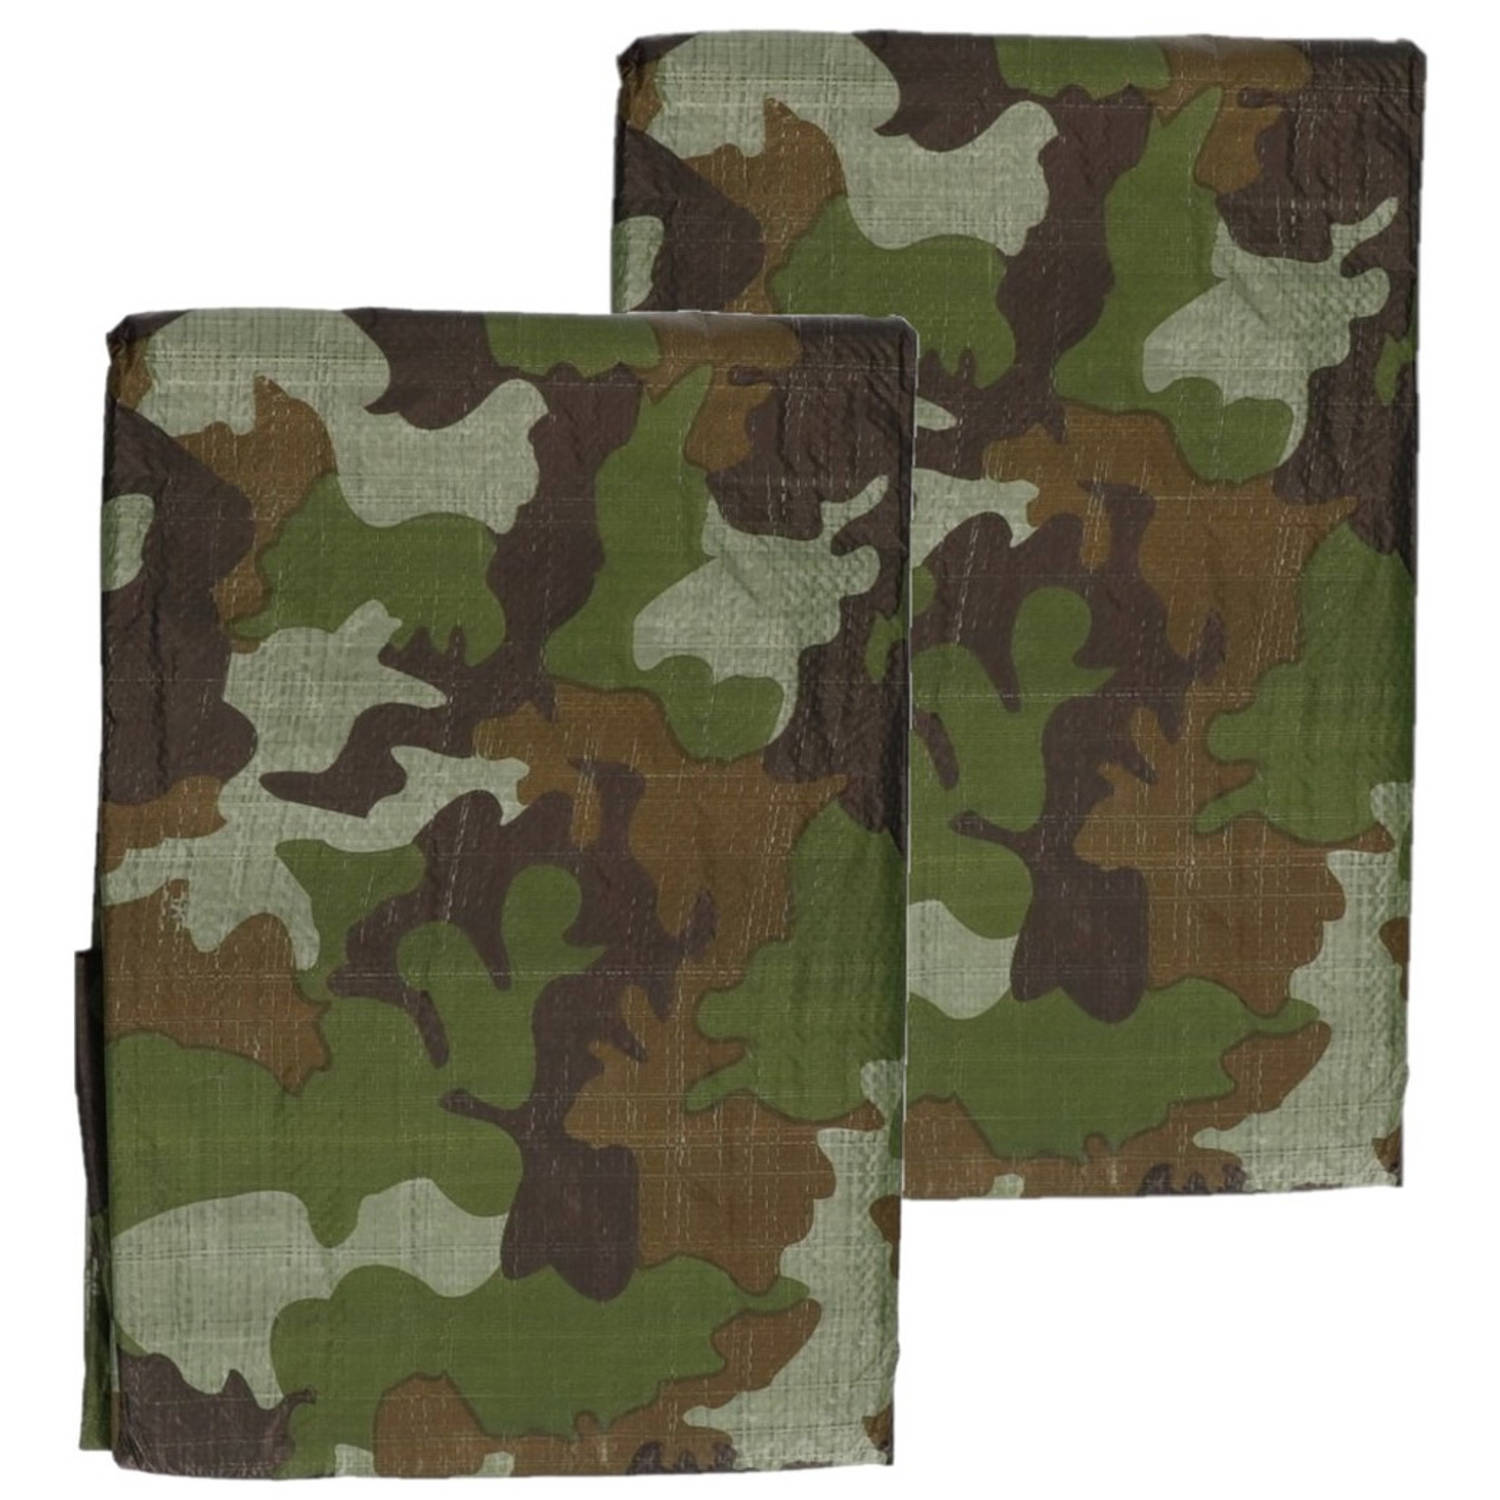 2x stuks groen camouflage afdekzeilen / dekzeilen 3 x 4 meter - Afdekzeilen